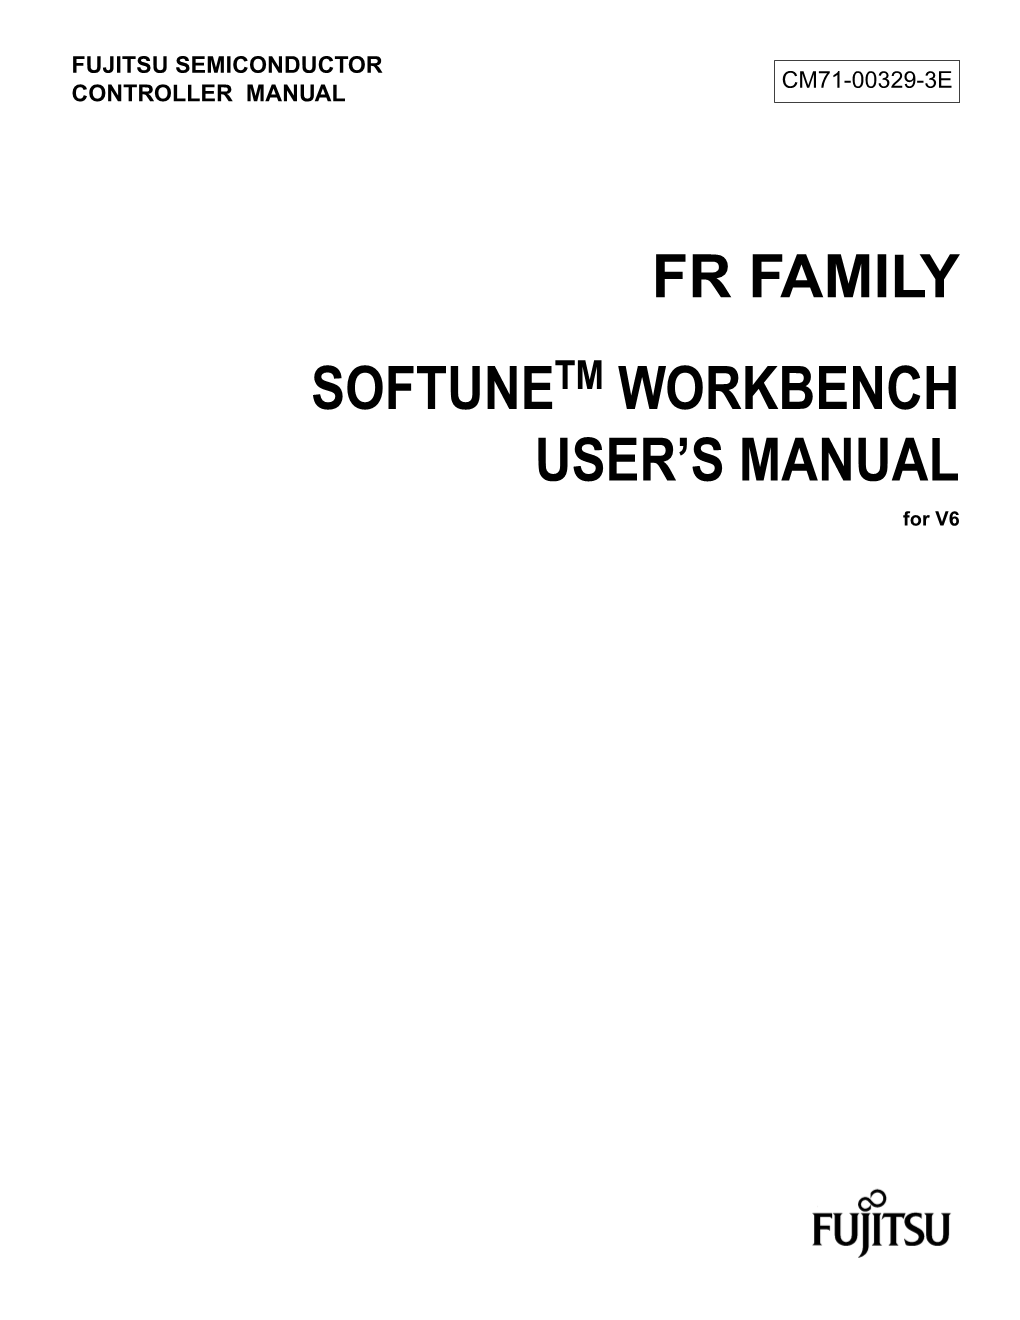 Fr Family Softune Workbench User's Manual